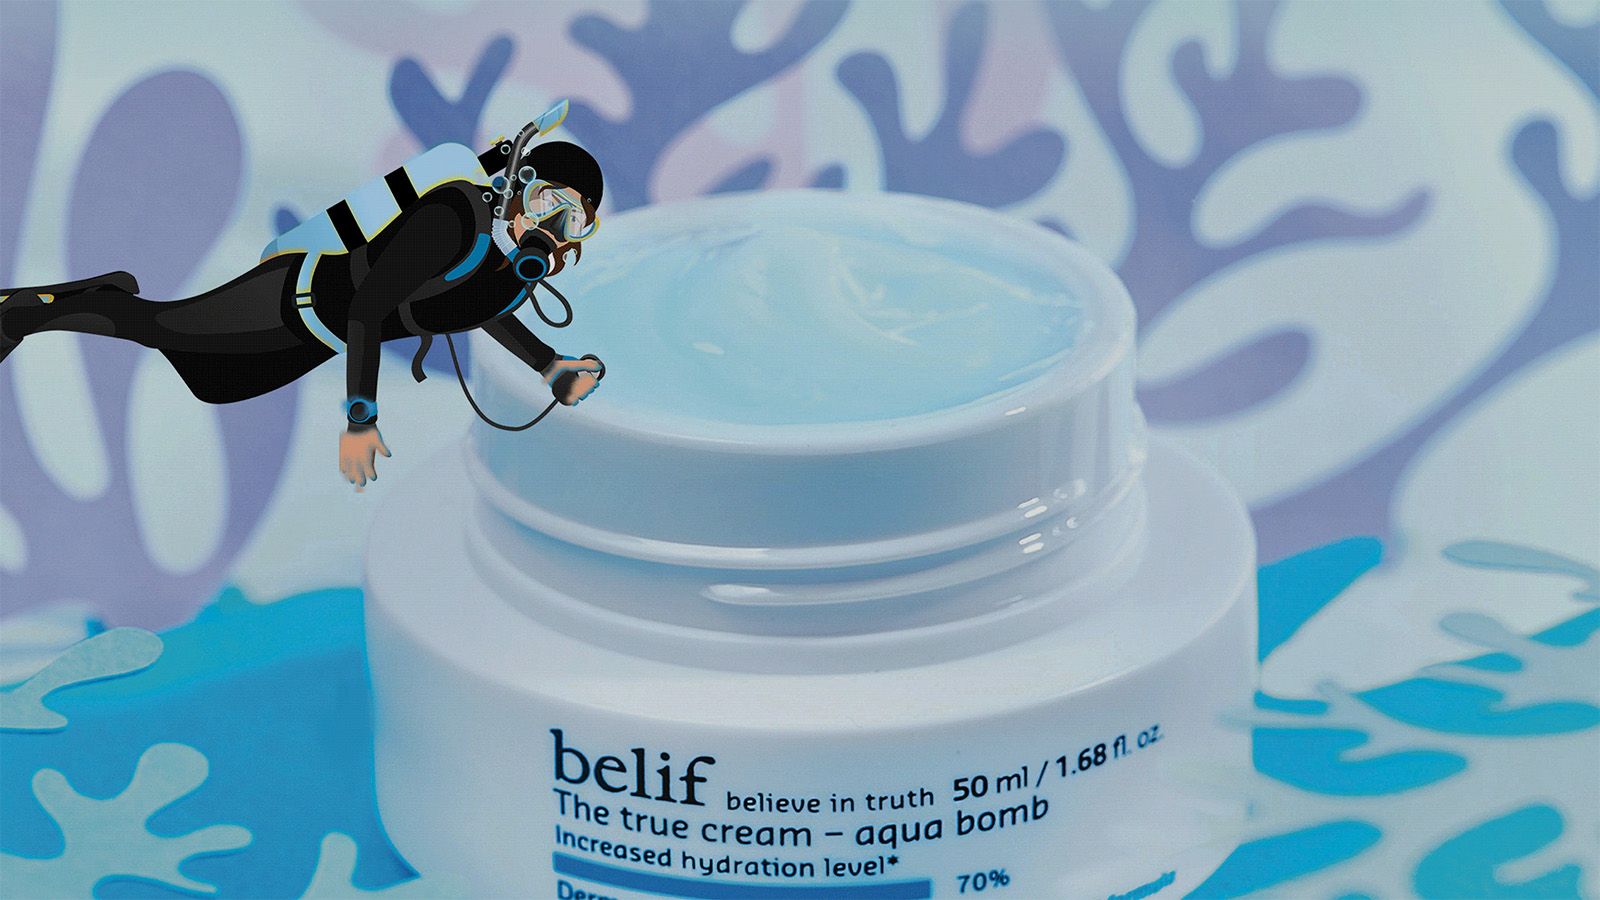 A diver on the bluish sea background swimming over the open jar of the belif True cream - Aqua bomb.